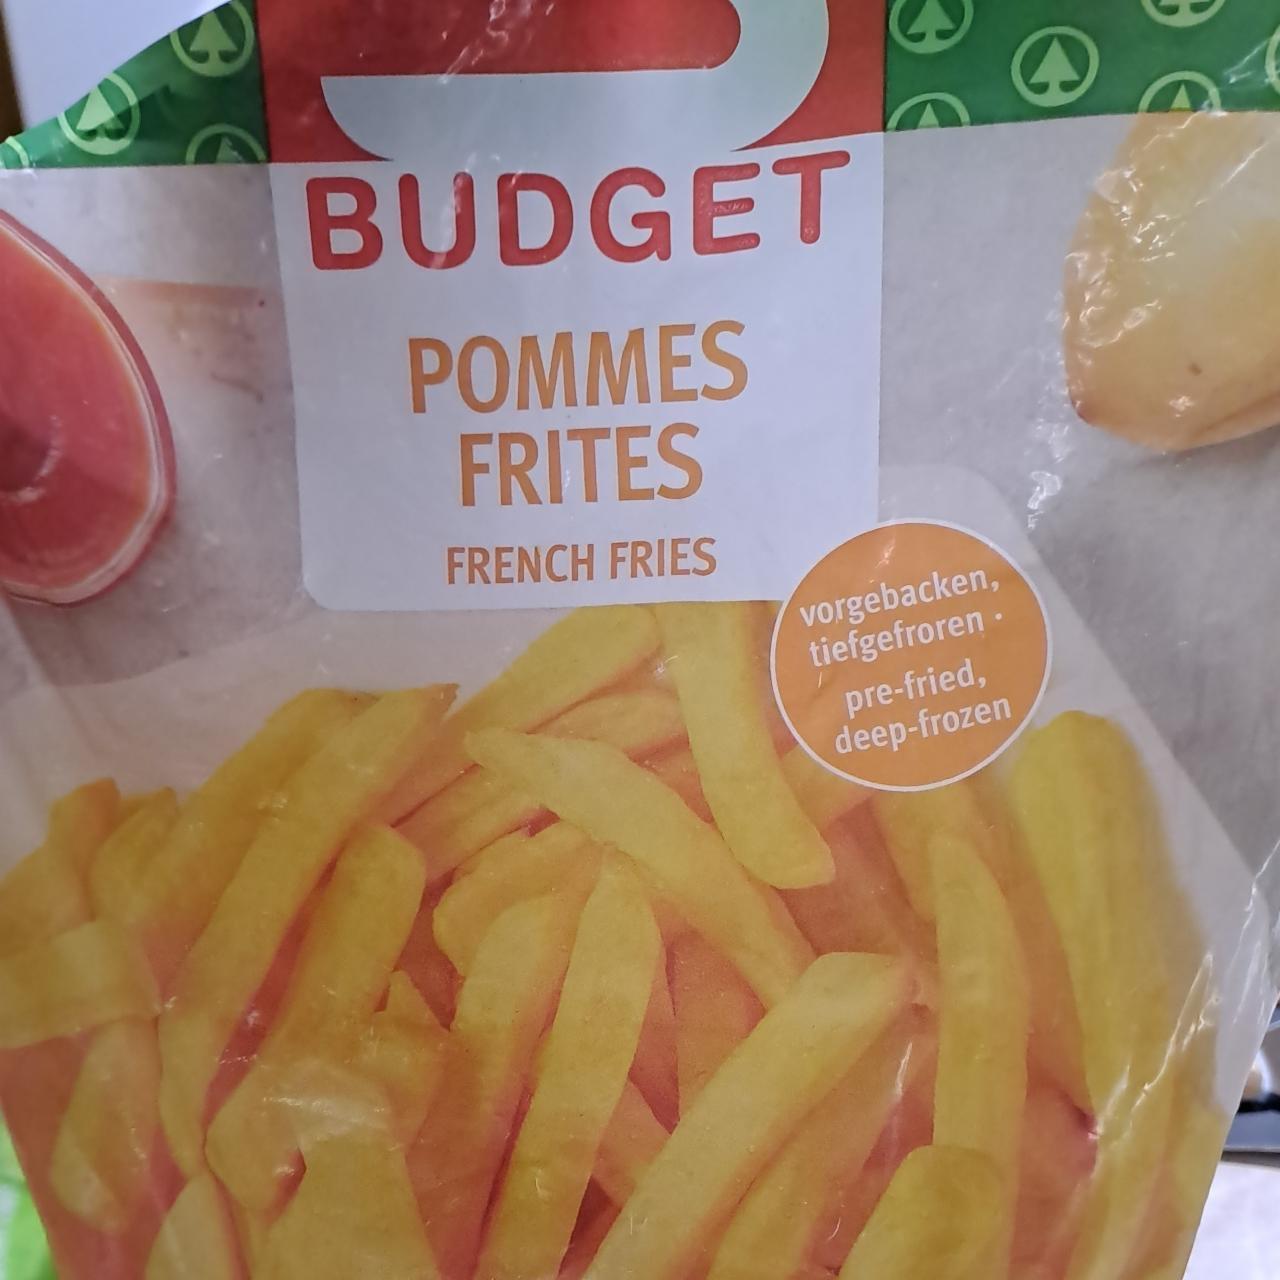 Képek - Pommes frites S Budget